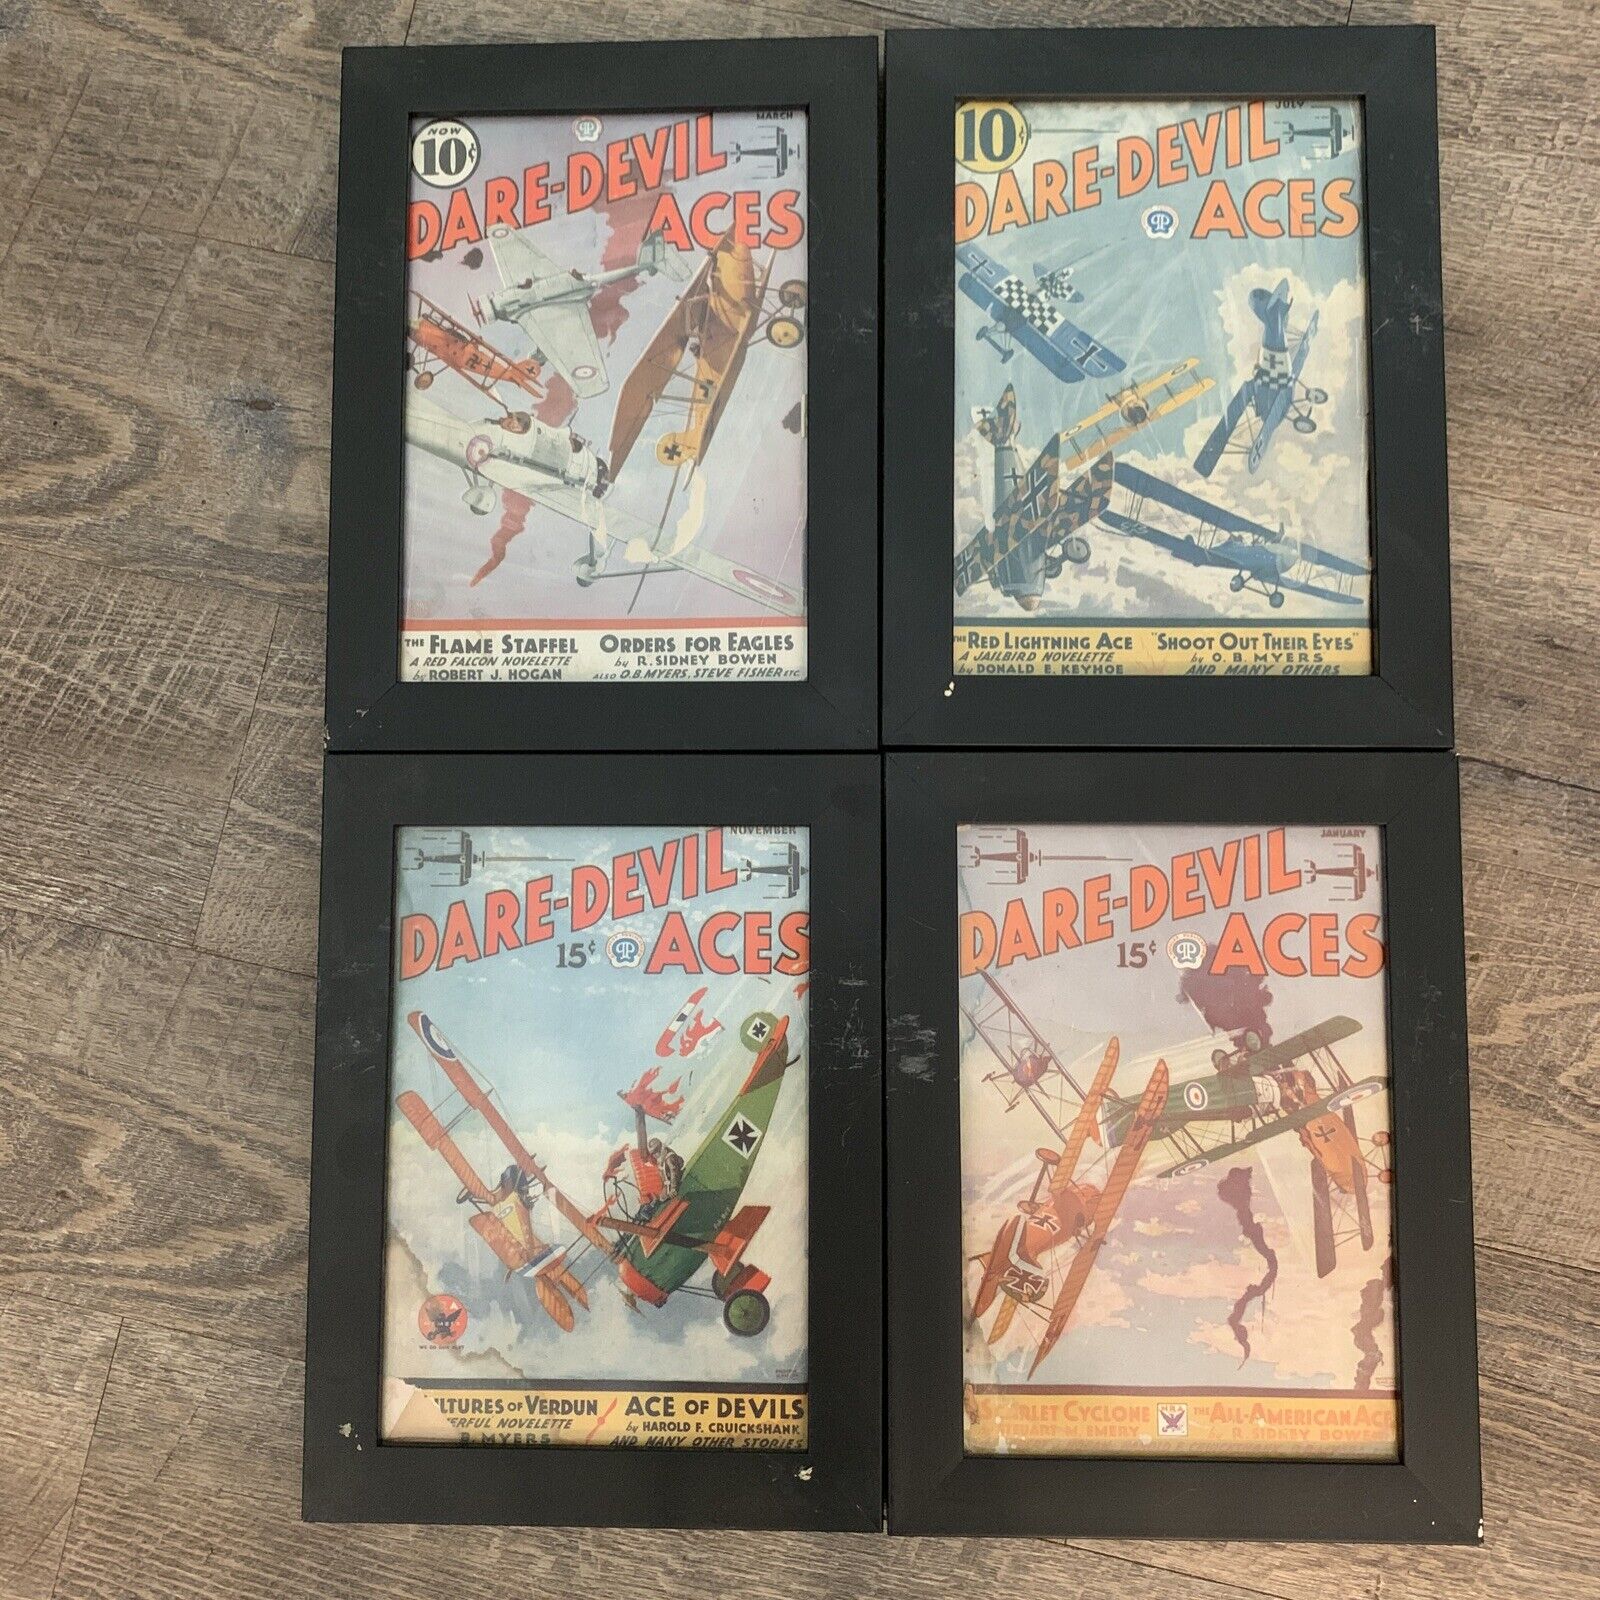 4 professionally framed DARE-DEVIL ACES comic books